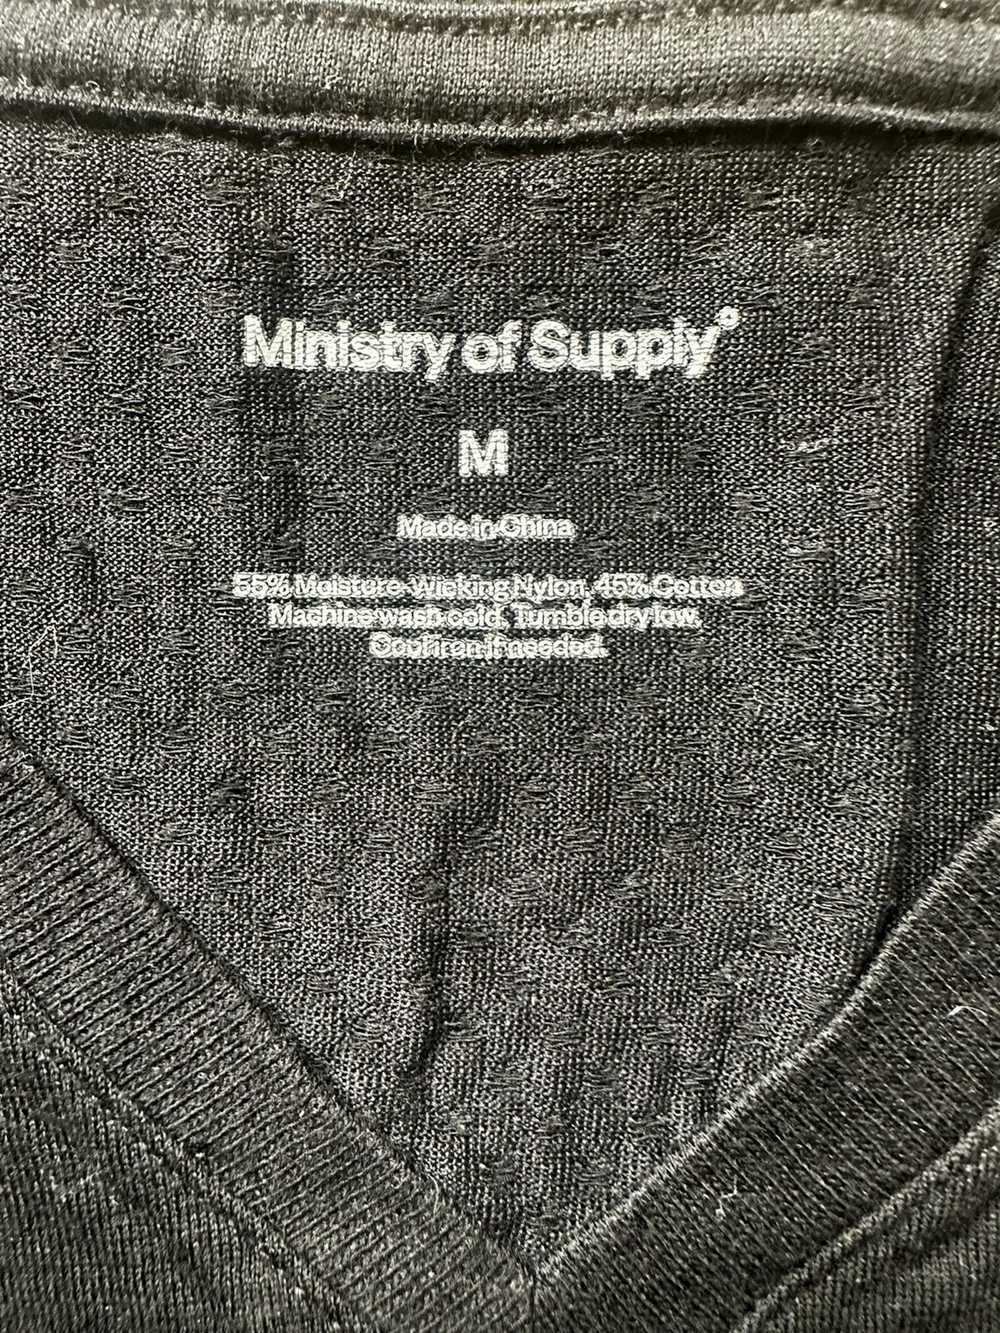 Ministry Of Supply Atlas v-neck - image 3